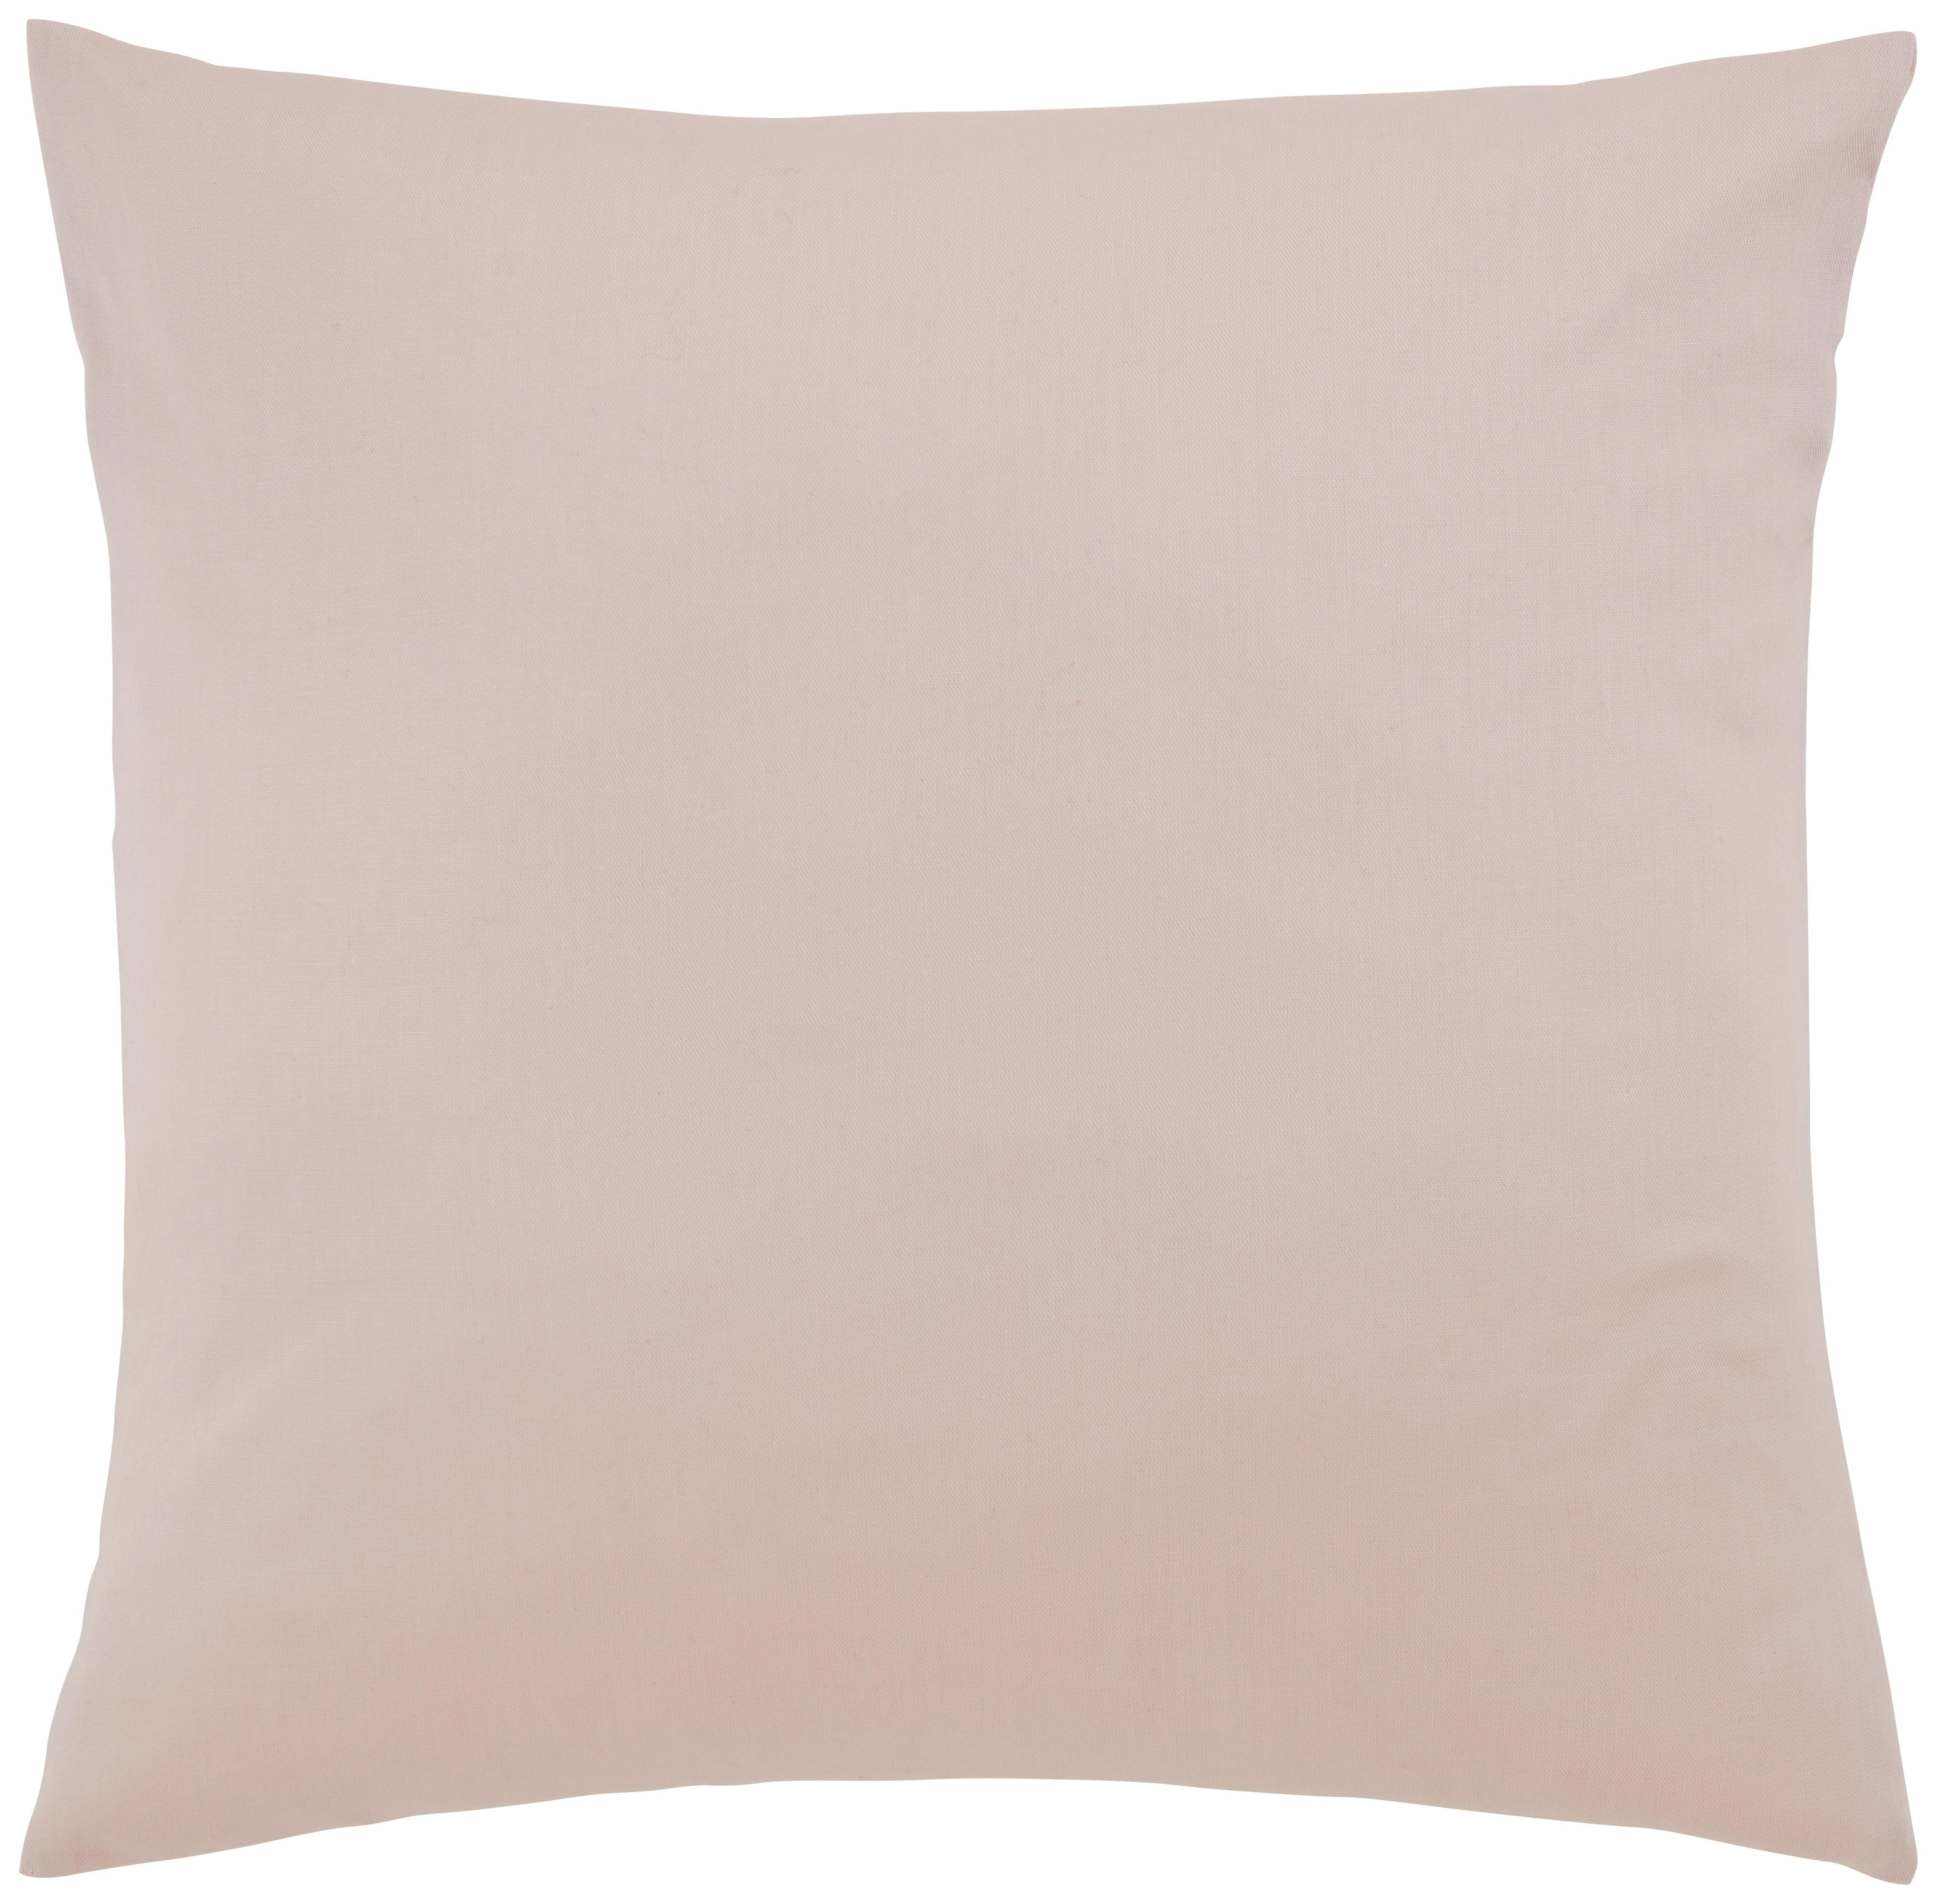 Dekorační Polštář Zippmex, 50/50cm, Růžová - růžová, textil (50/50cm) - Modern Living